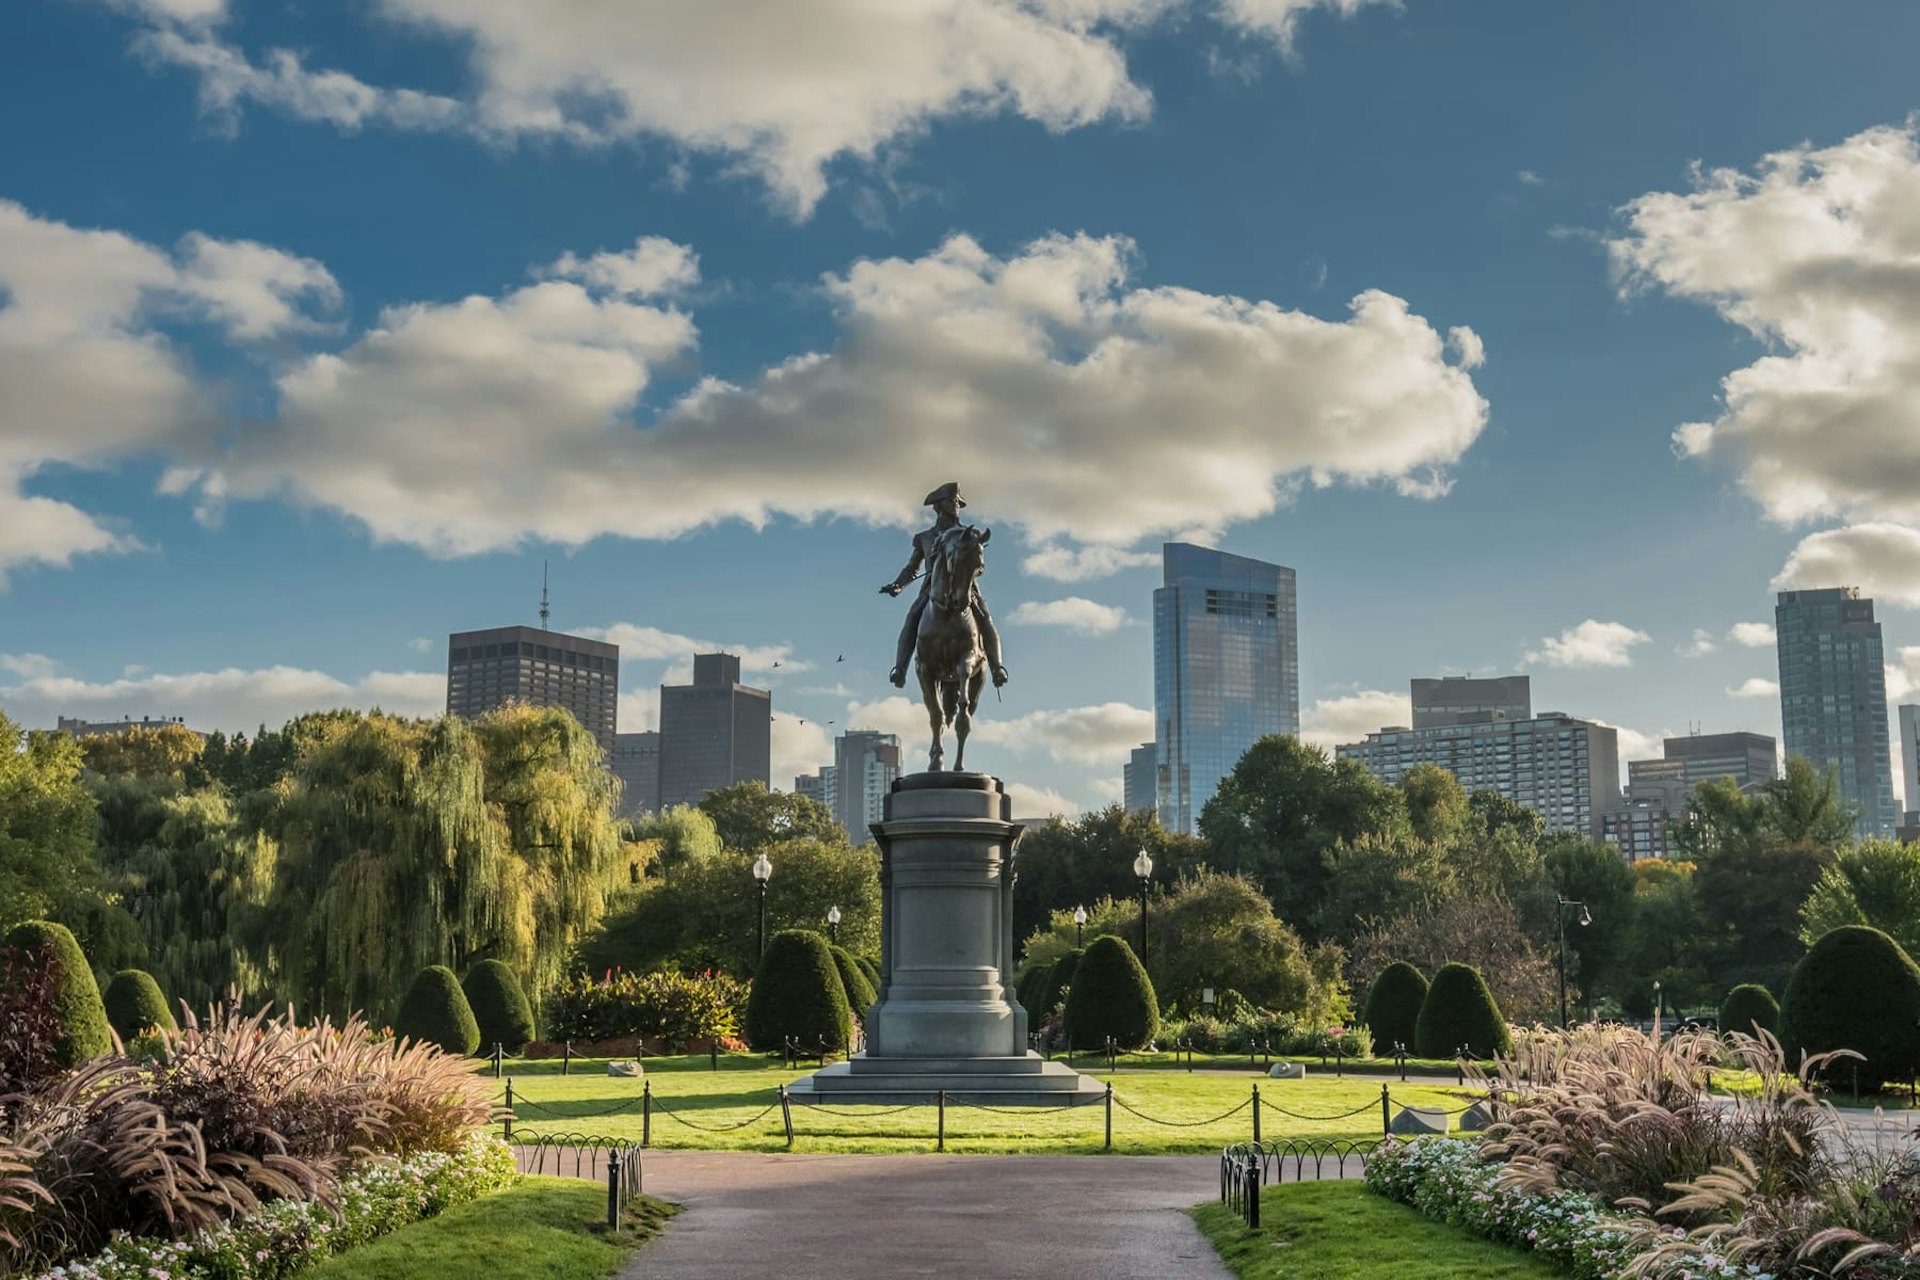 Monument in Boston Public Garden, a city park in Boston, Massachusetts